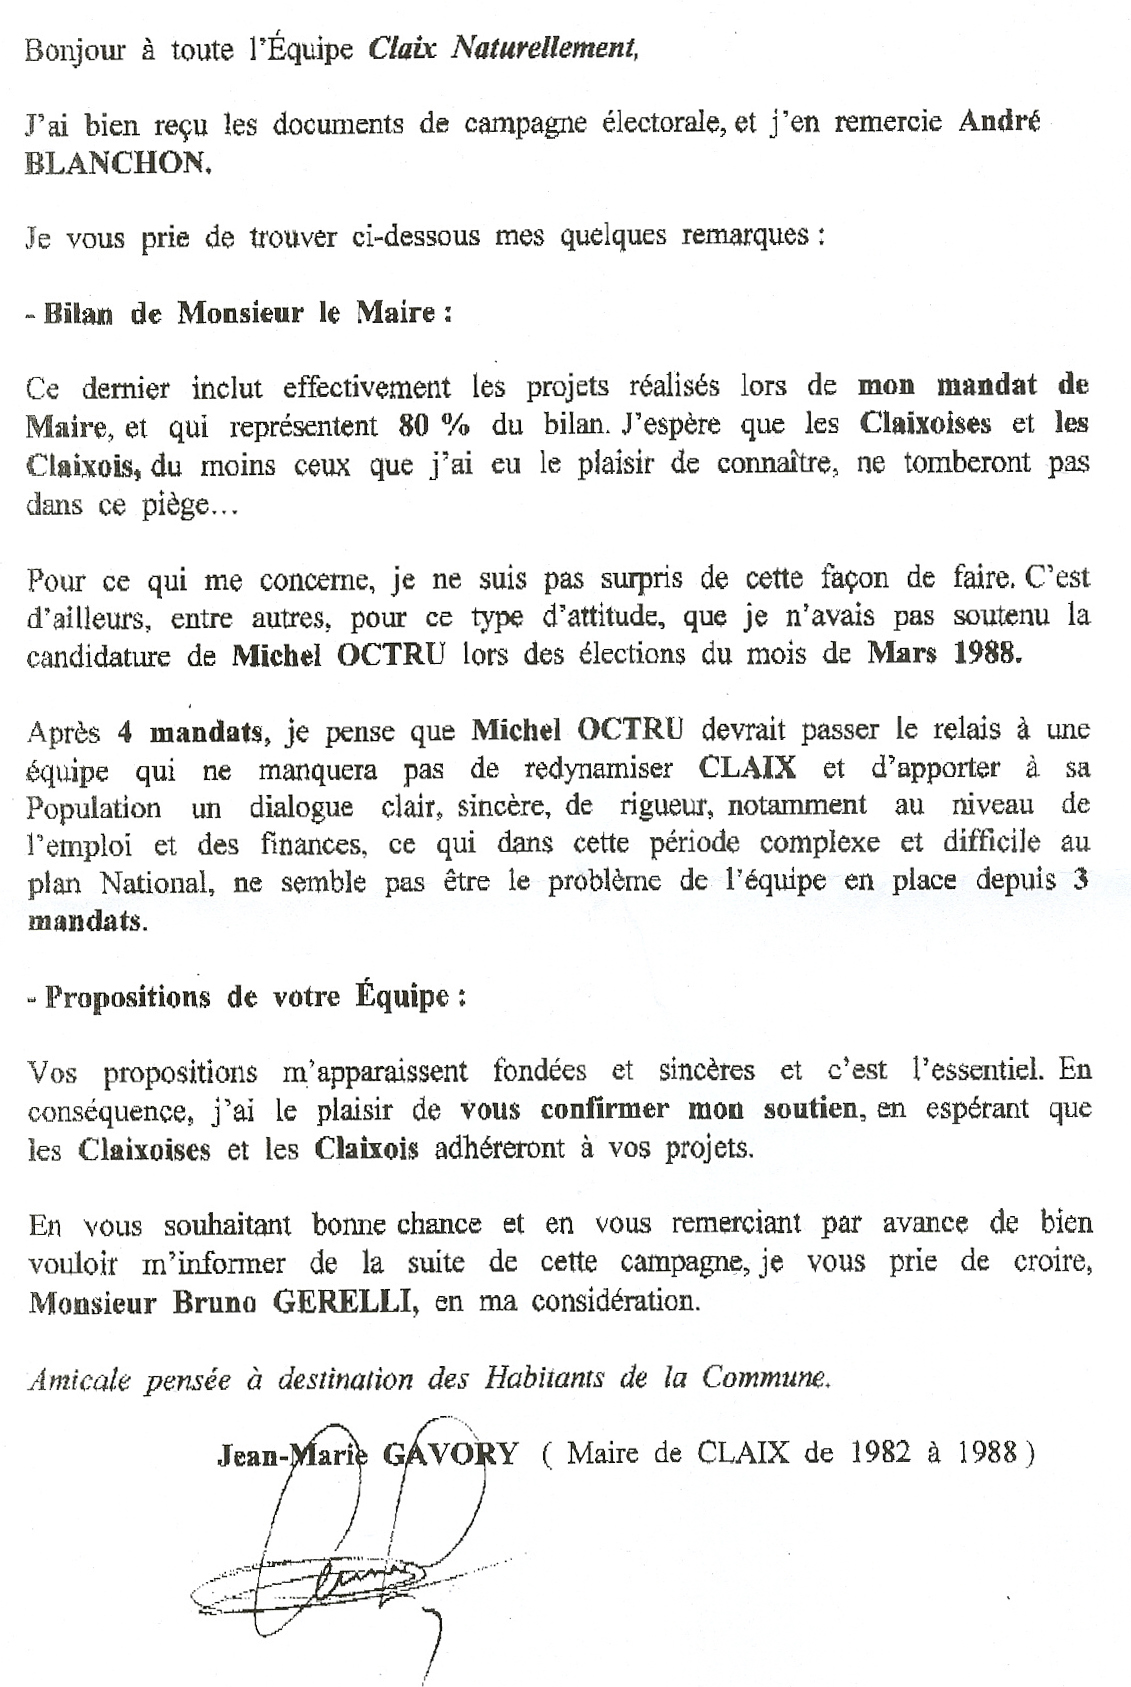 Fax reçu de Jean-Marie Gavory